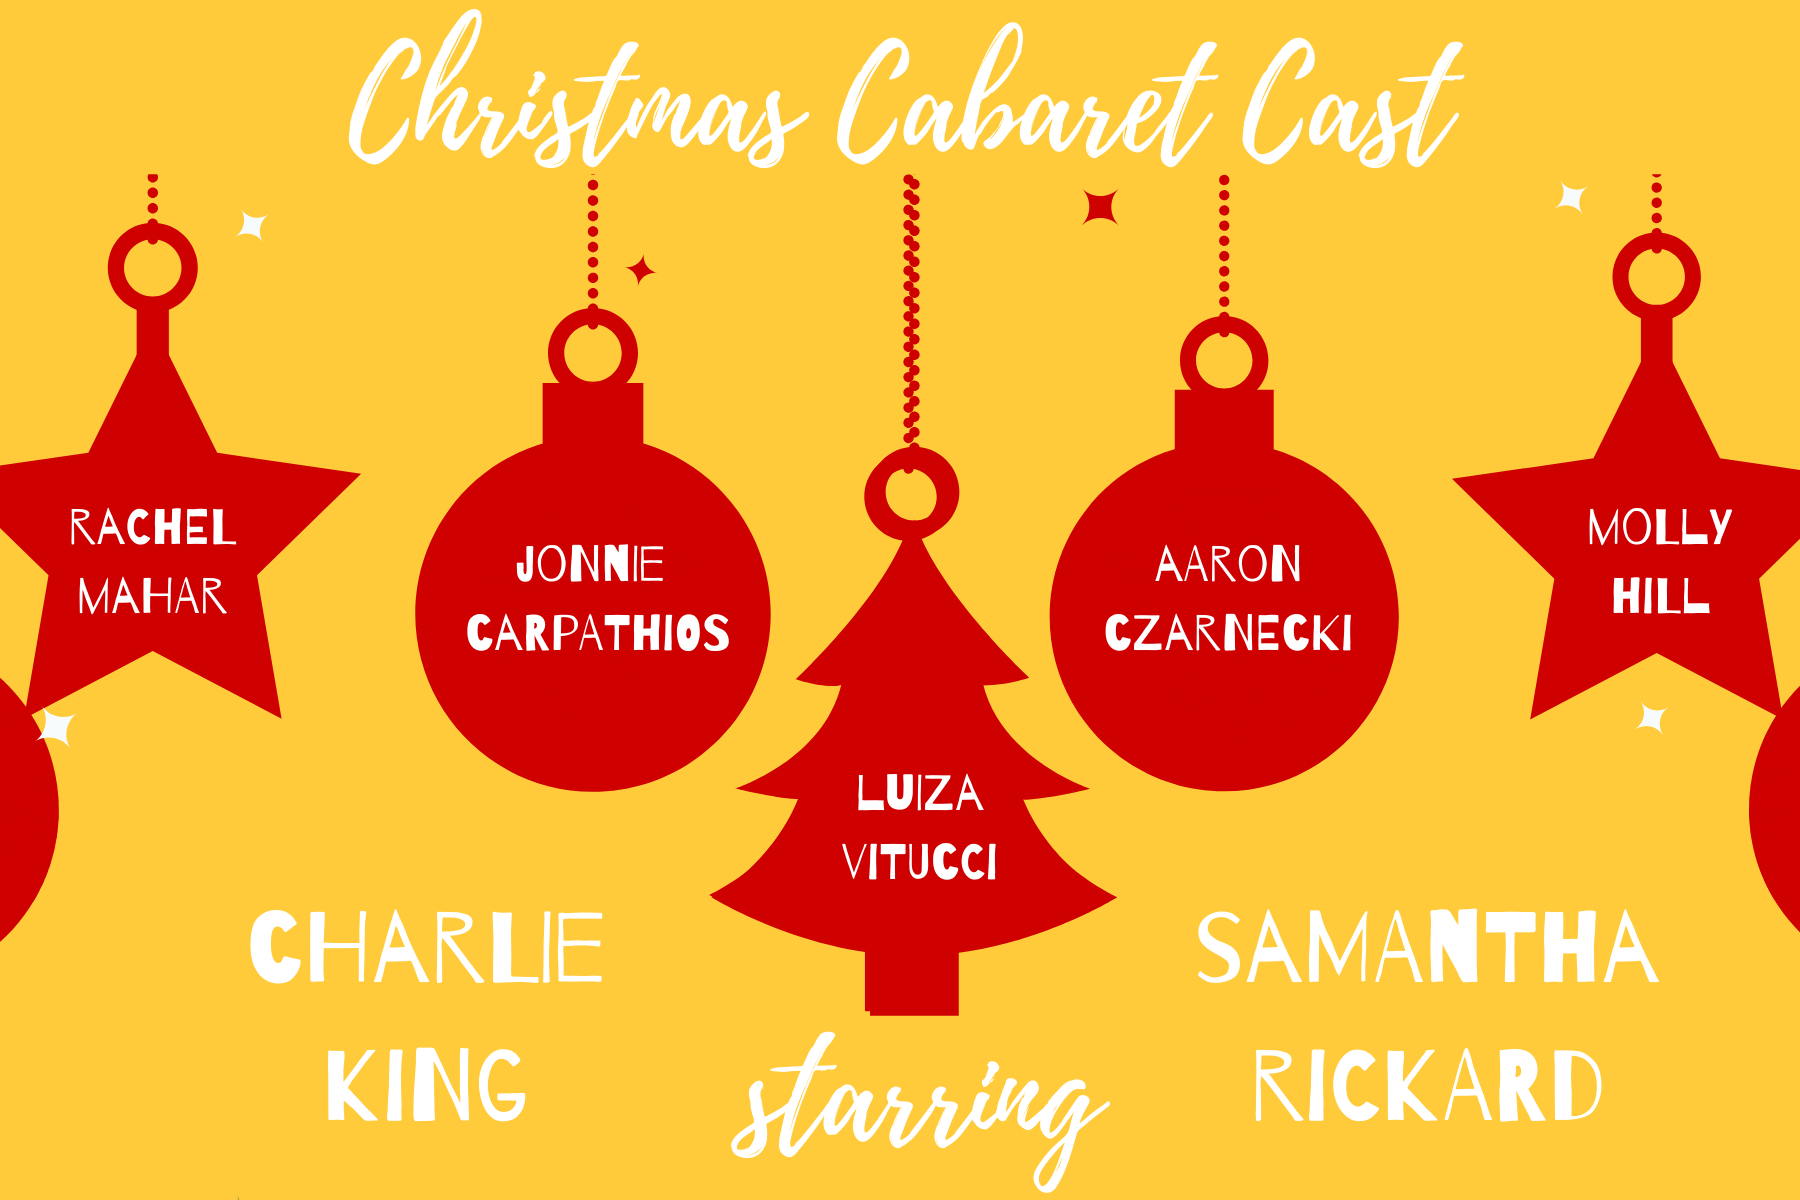 barn christmas cabaret cast